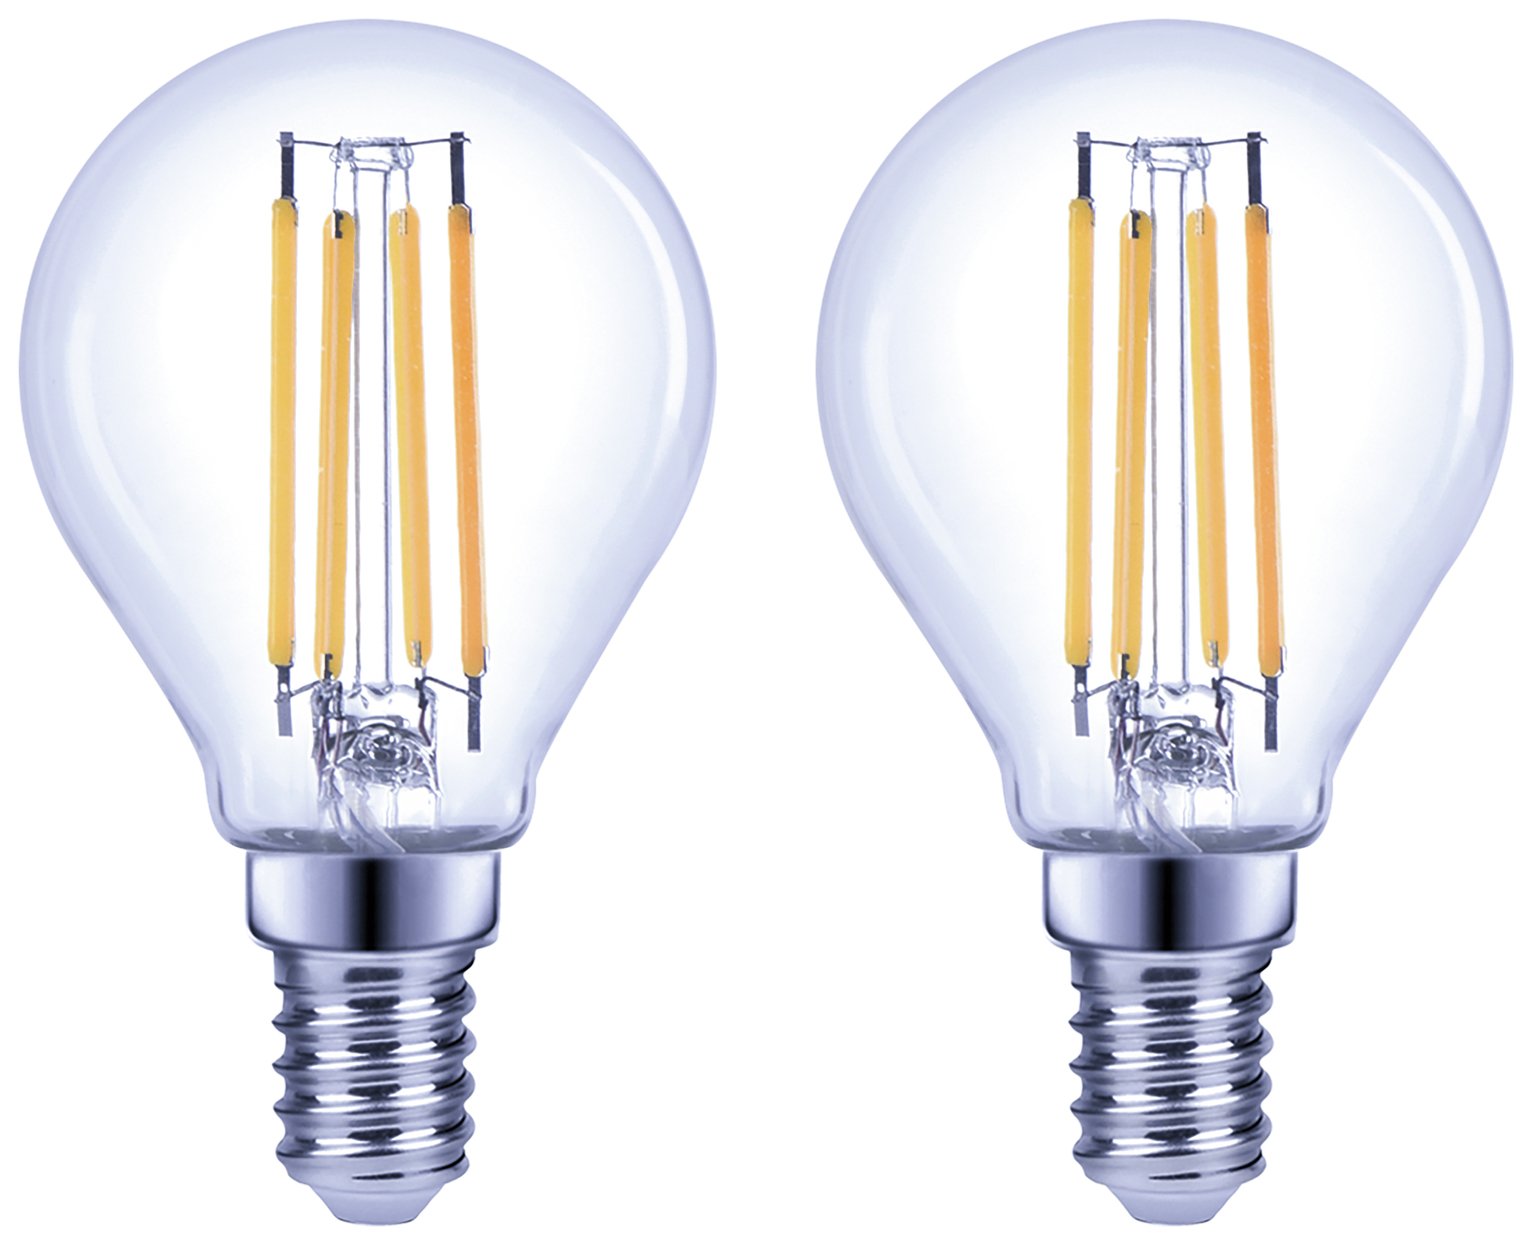 Argos Home 3.4W Filament LED Globe SES Light Bulb - 2 Pack